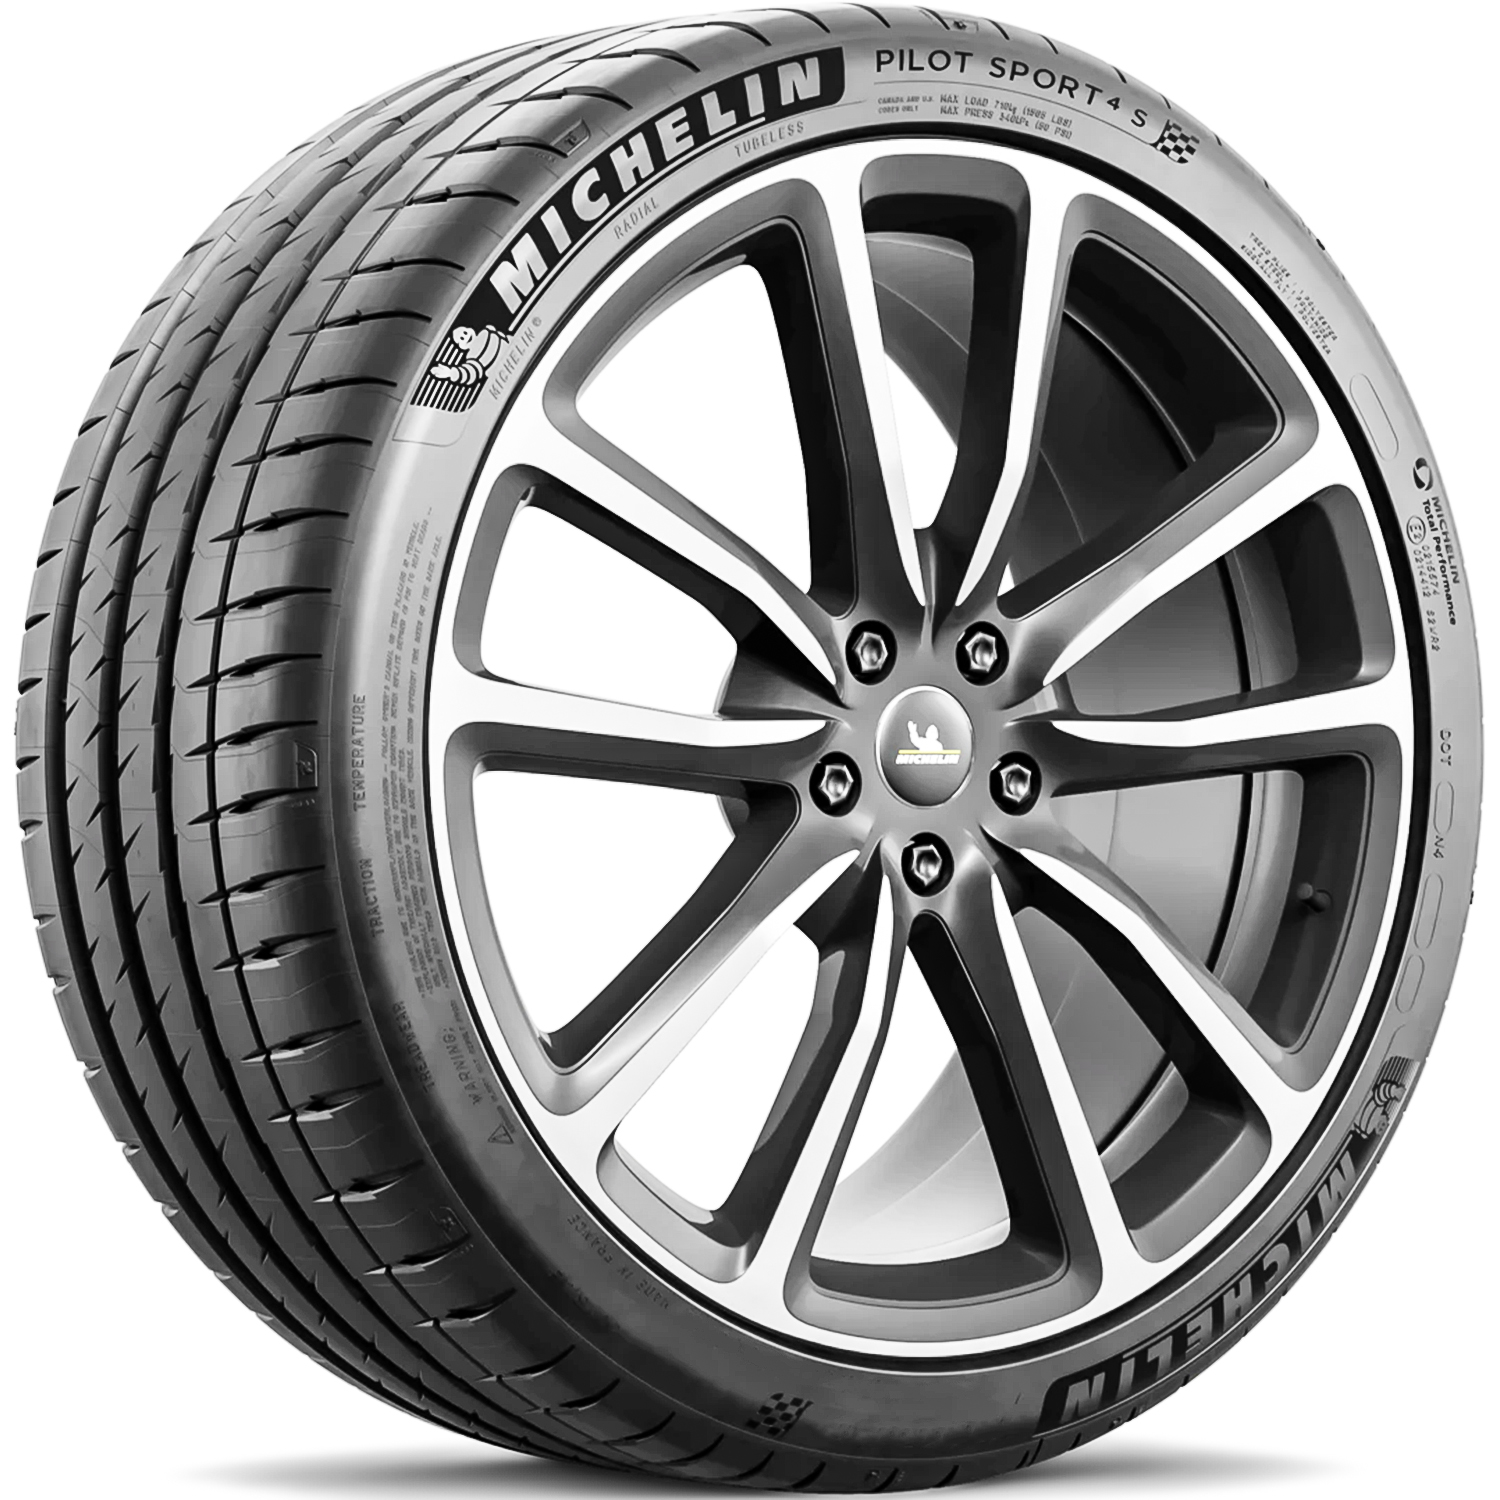 Michelin Pilot Sport 4S Performance 215/45ZR17 (91Y) XL Passenger Tire - image 5 of 8